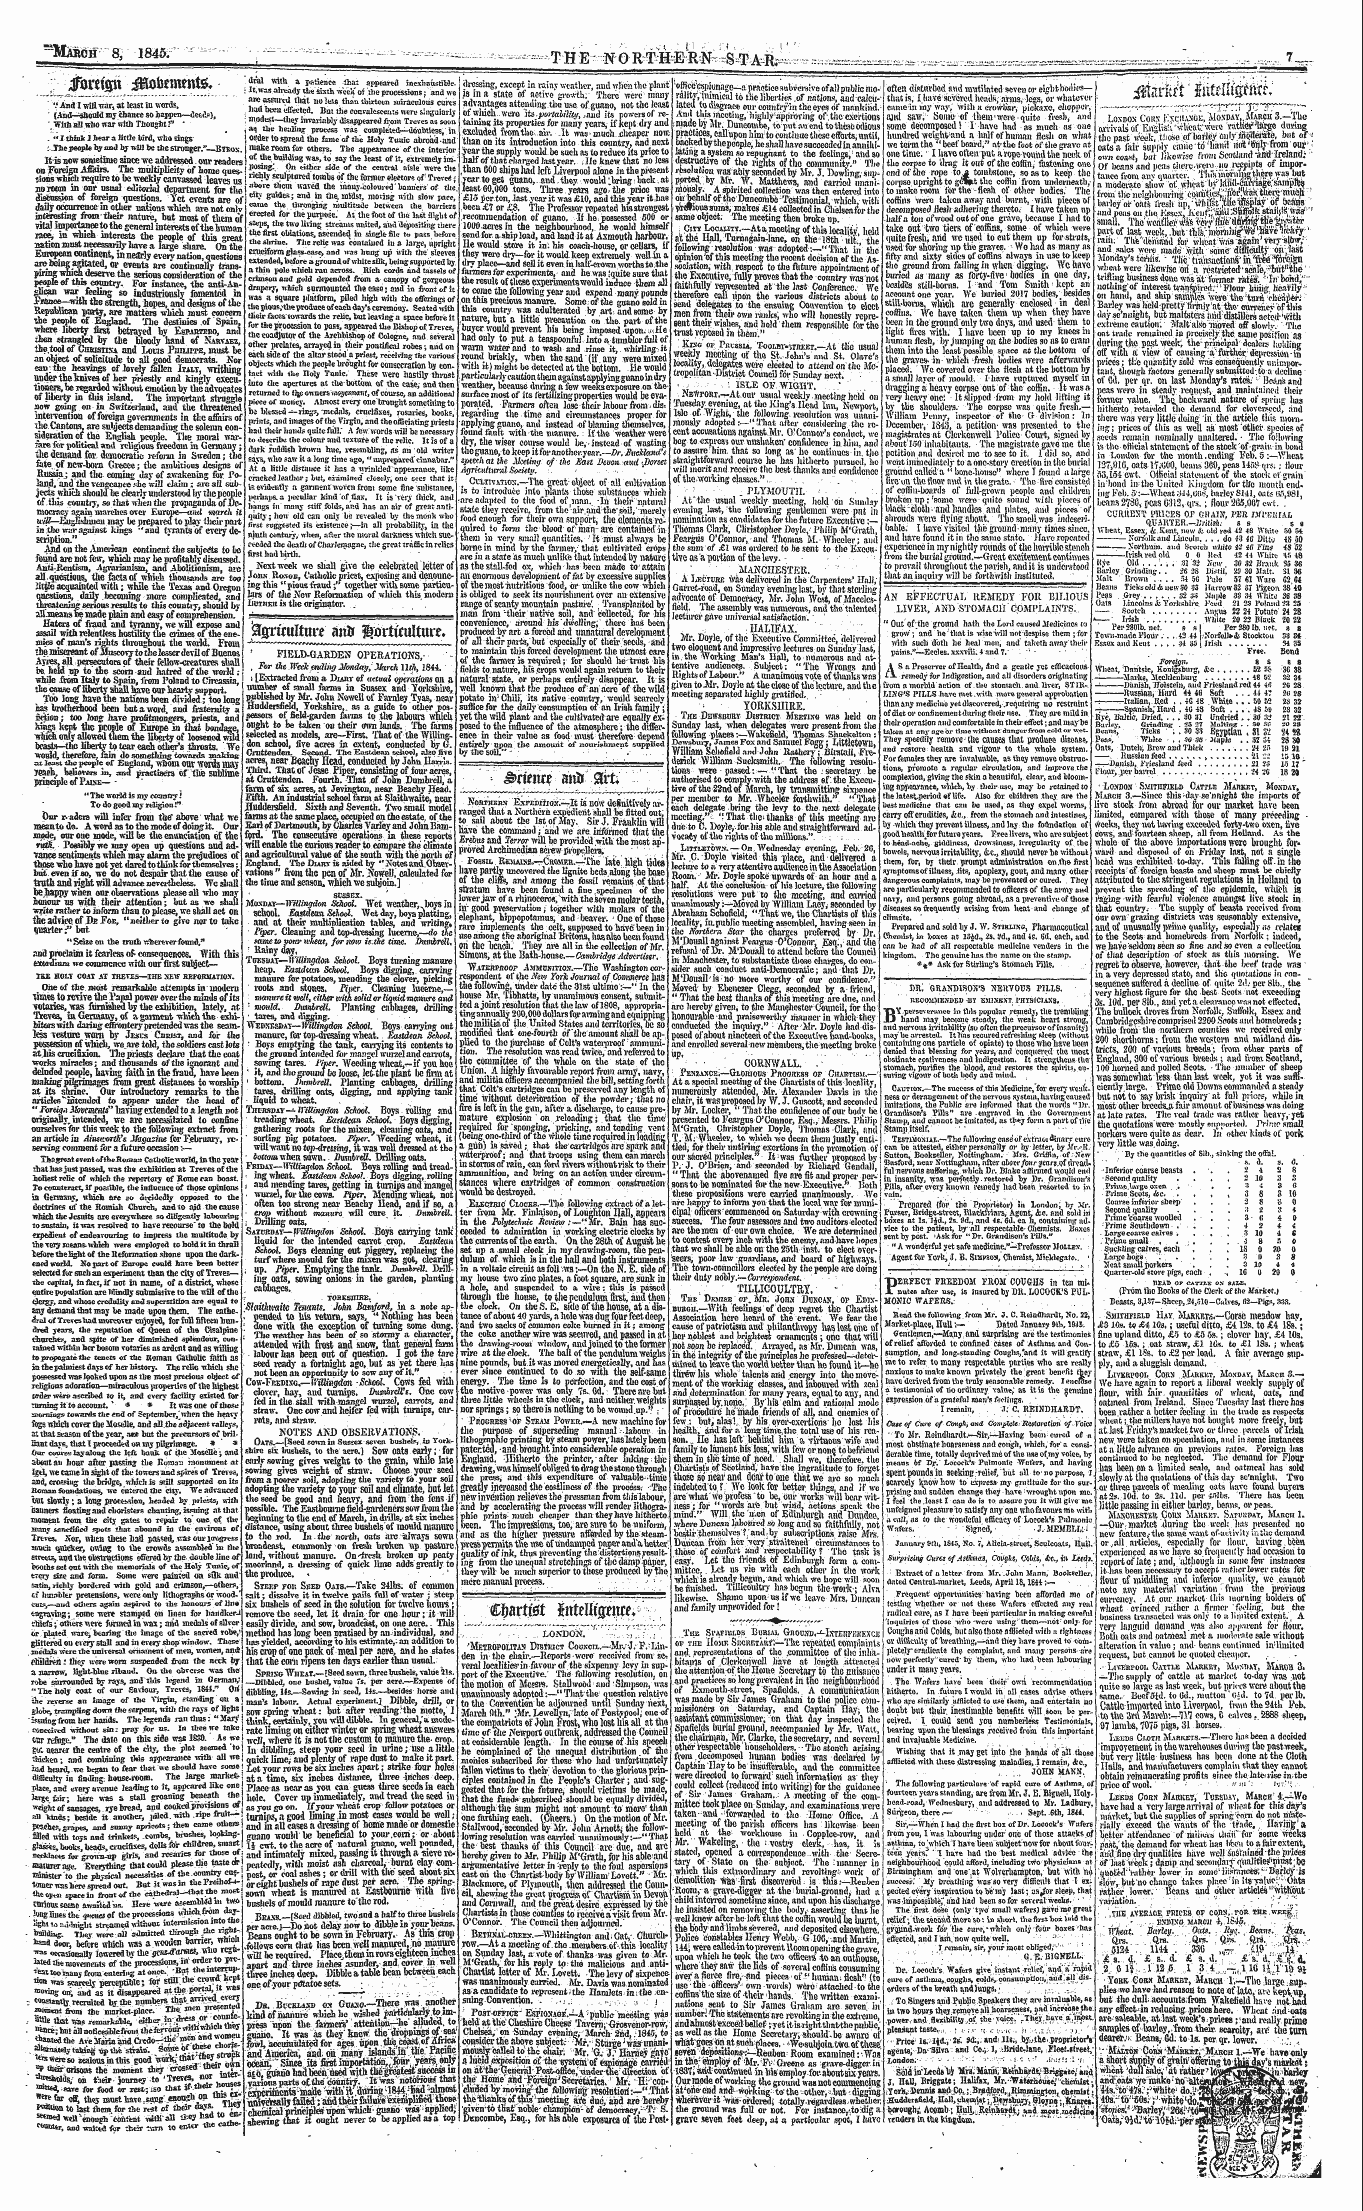 Northern Star (1837-1852): jS F Y, 3rd edition - G Ffrwulttir* Mtir Jtioittttdture